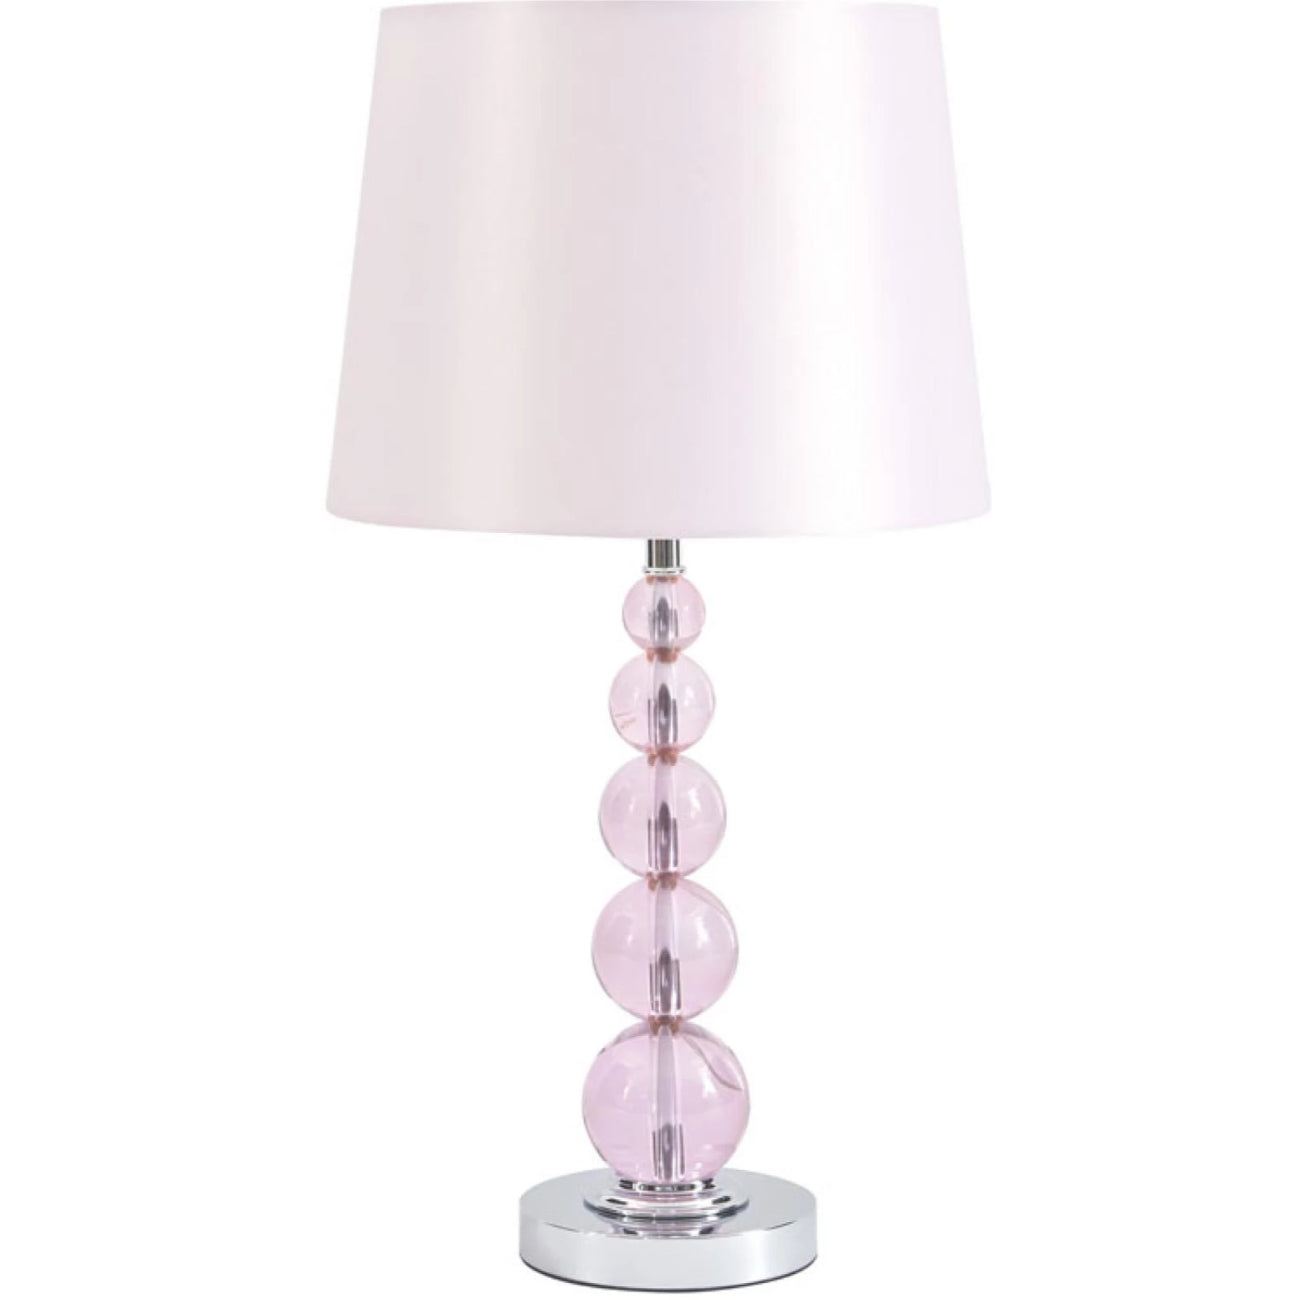 Letty Pin Crystal Table Lamp, Lamp, Ashley Furniture - Adams Furniture